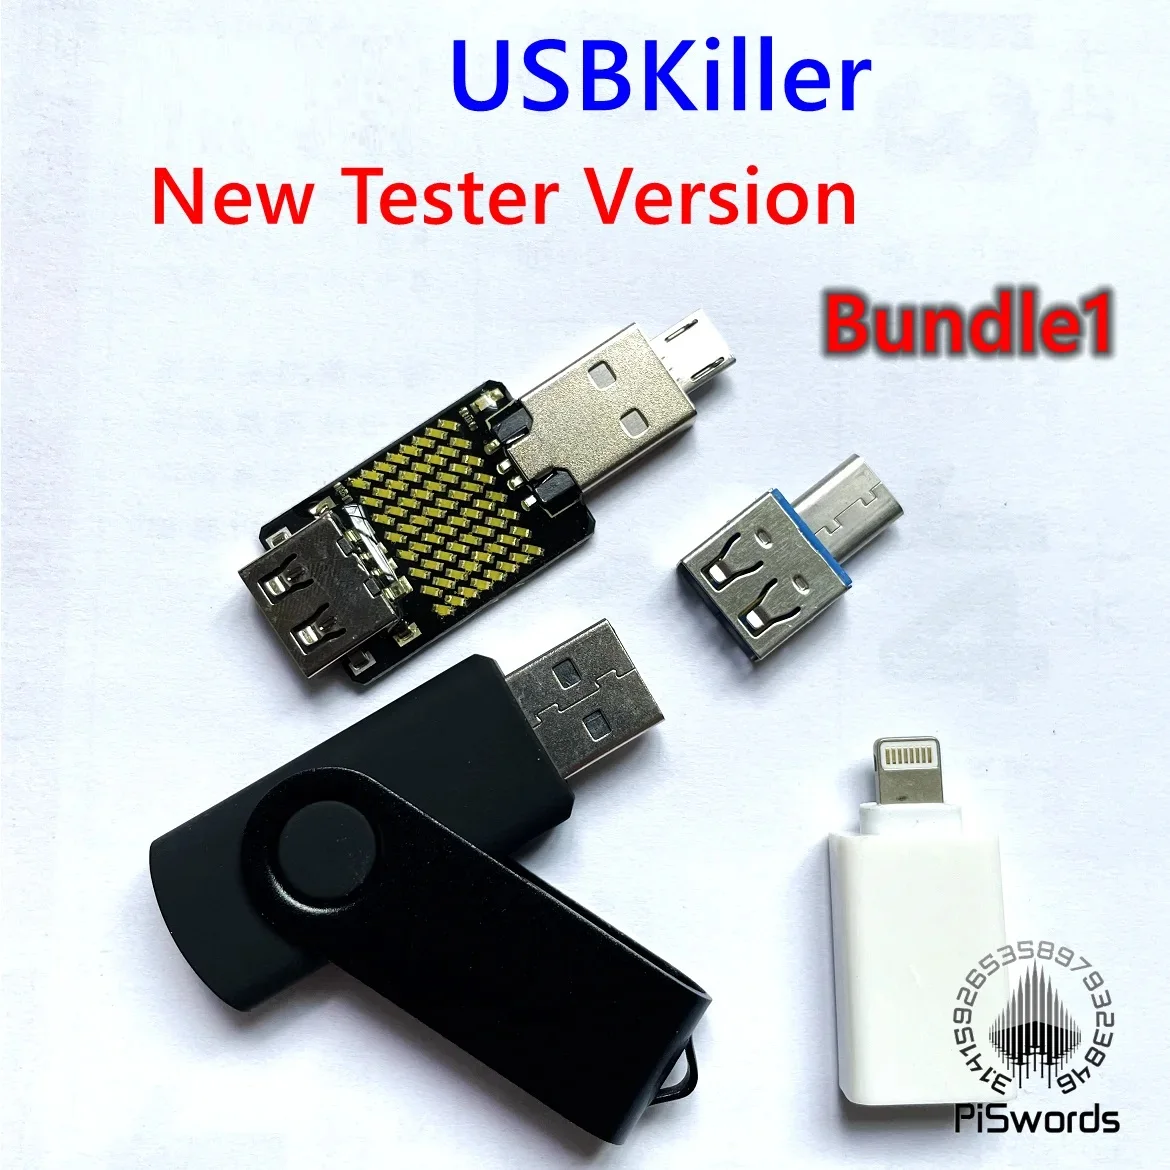 USB killer U Disk Killer Miniature power module High Voltage Pulse Generator USBKiller Accessories Complete